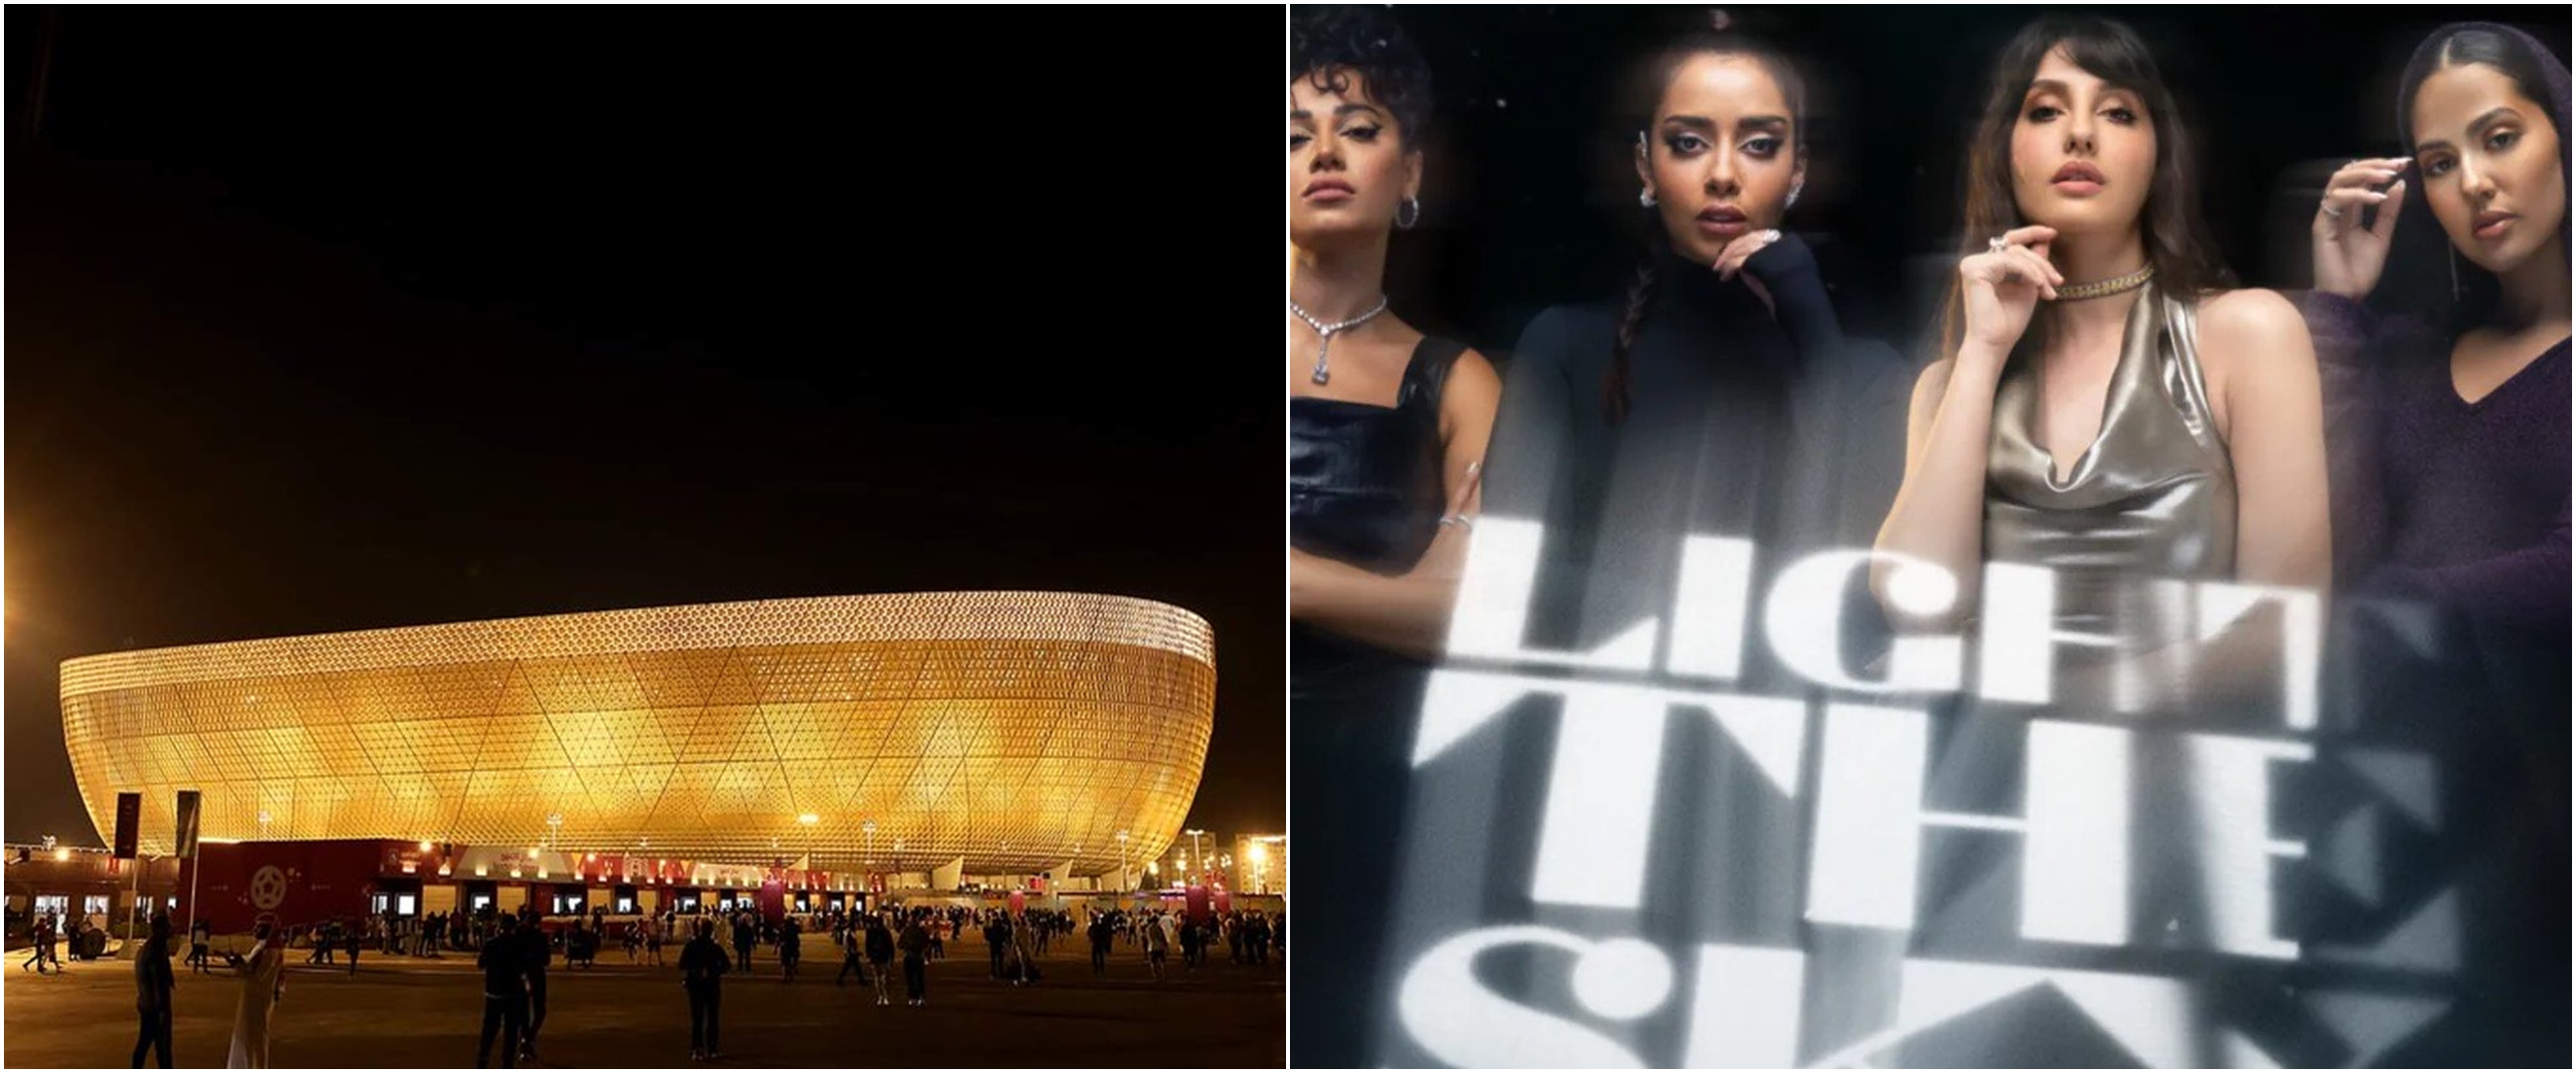 Usung tema "A Night to Remember", ini deretan artis di Closing Ceremony Piala Dunia Qatar 2022